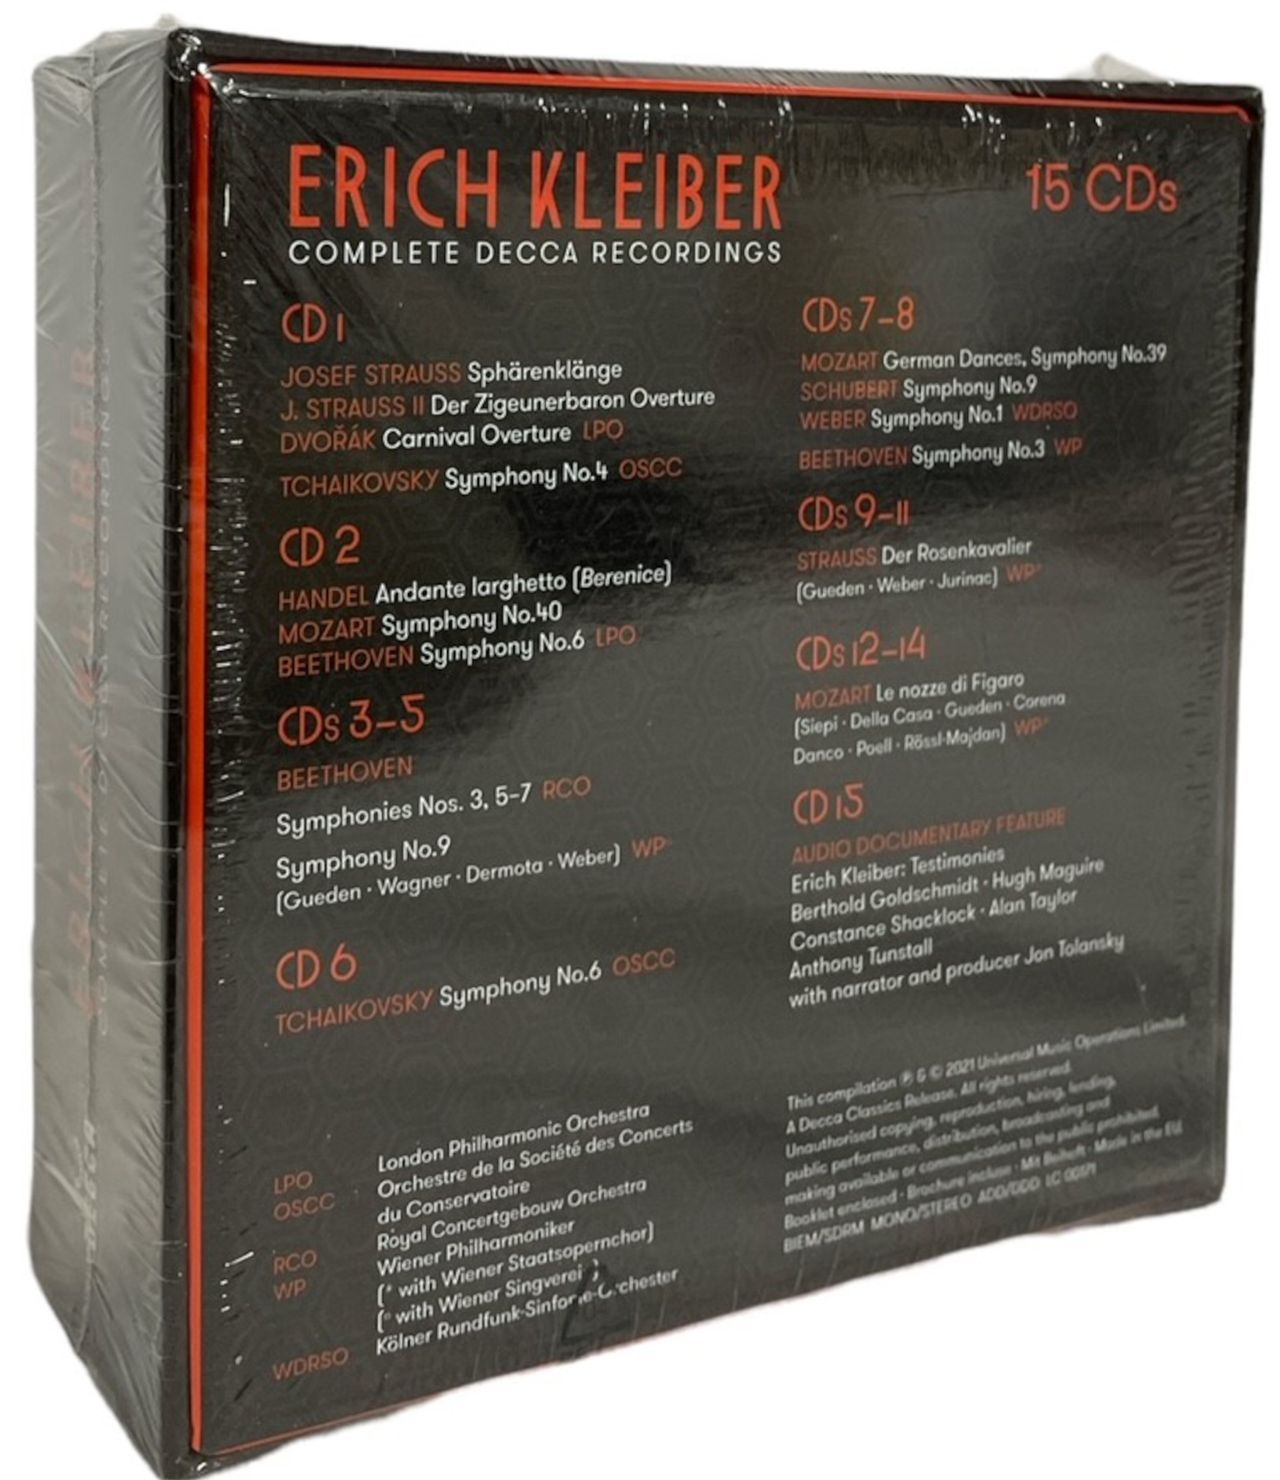 Erich Kleiber Complete Decca Recordings - Sealed Box UK Cd album